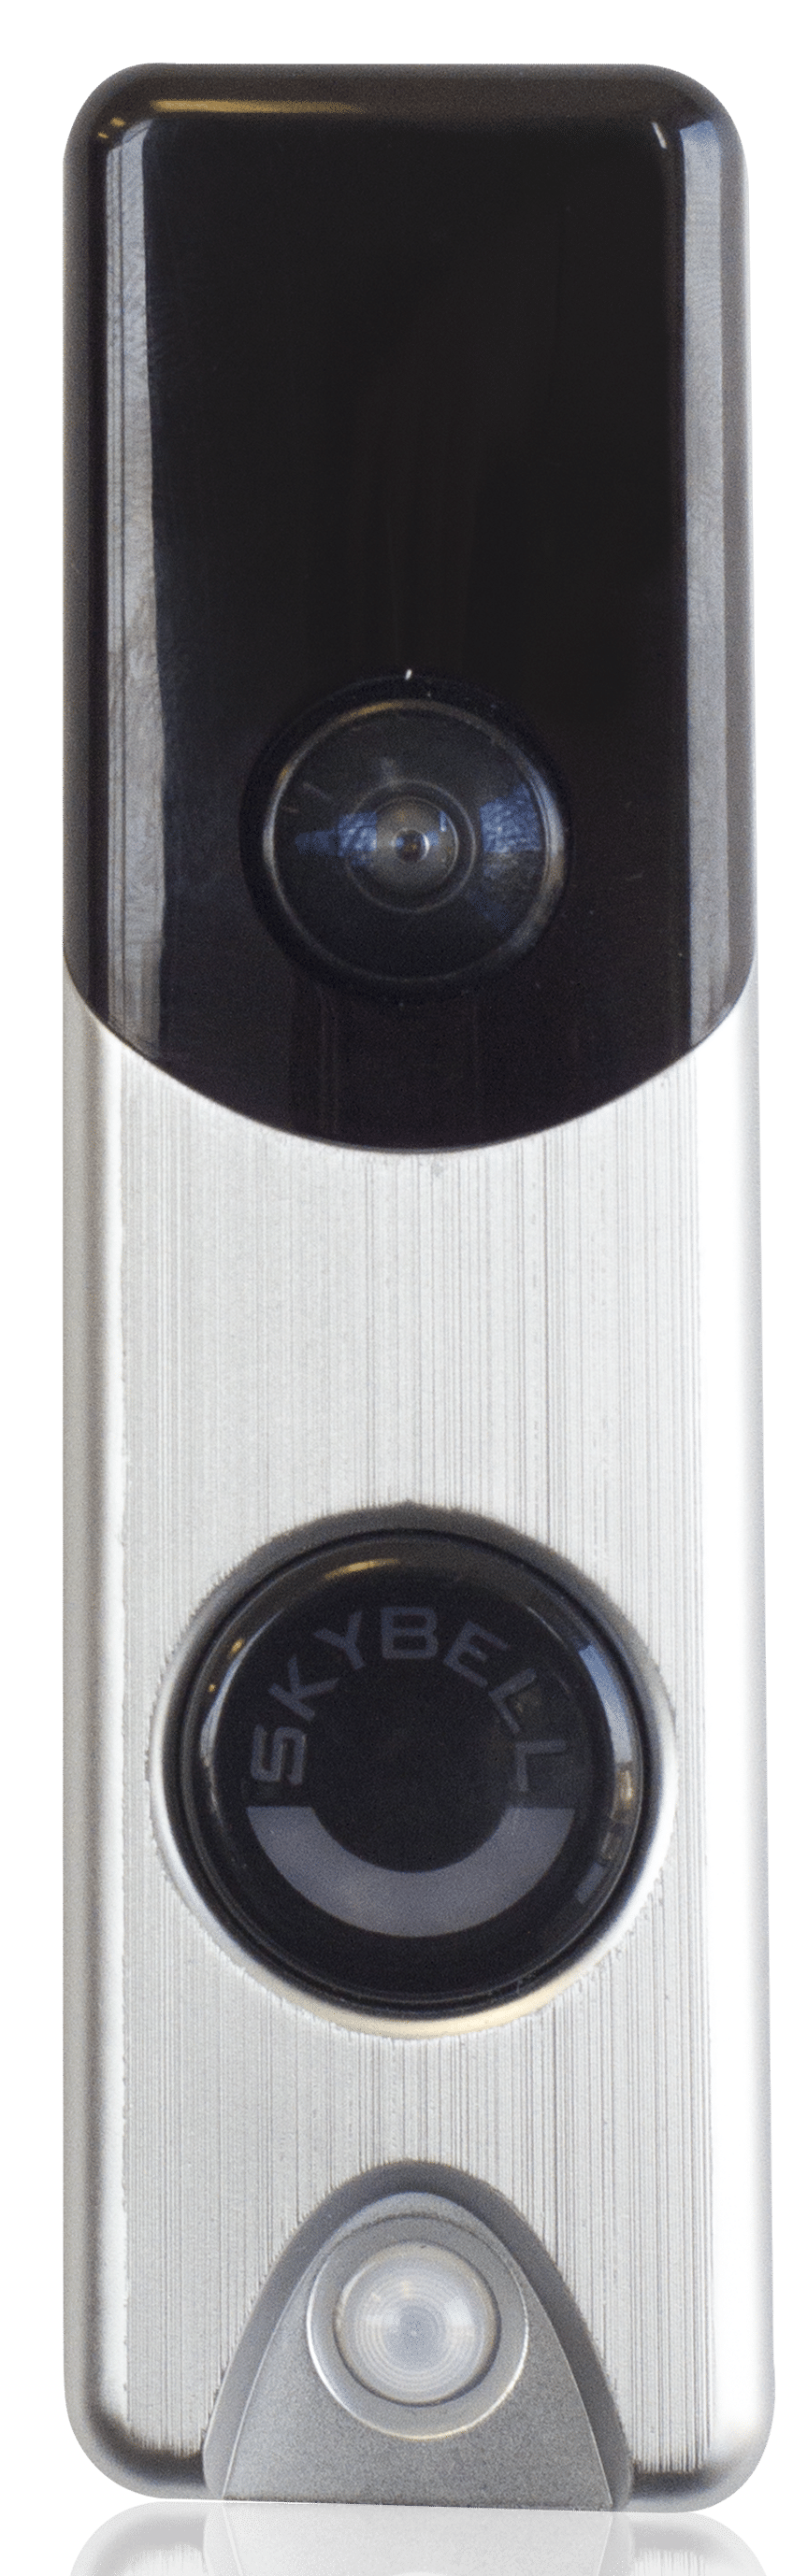 doorbell security camera device